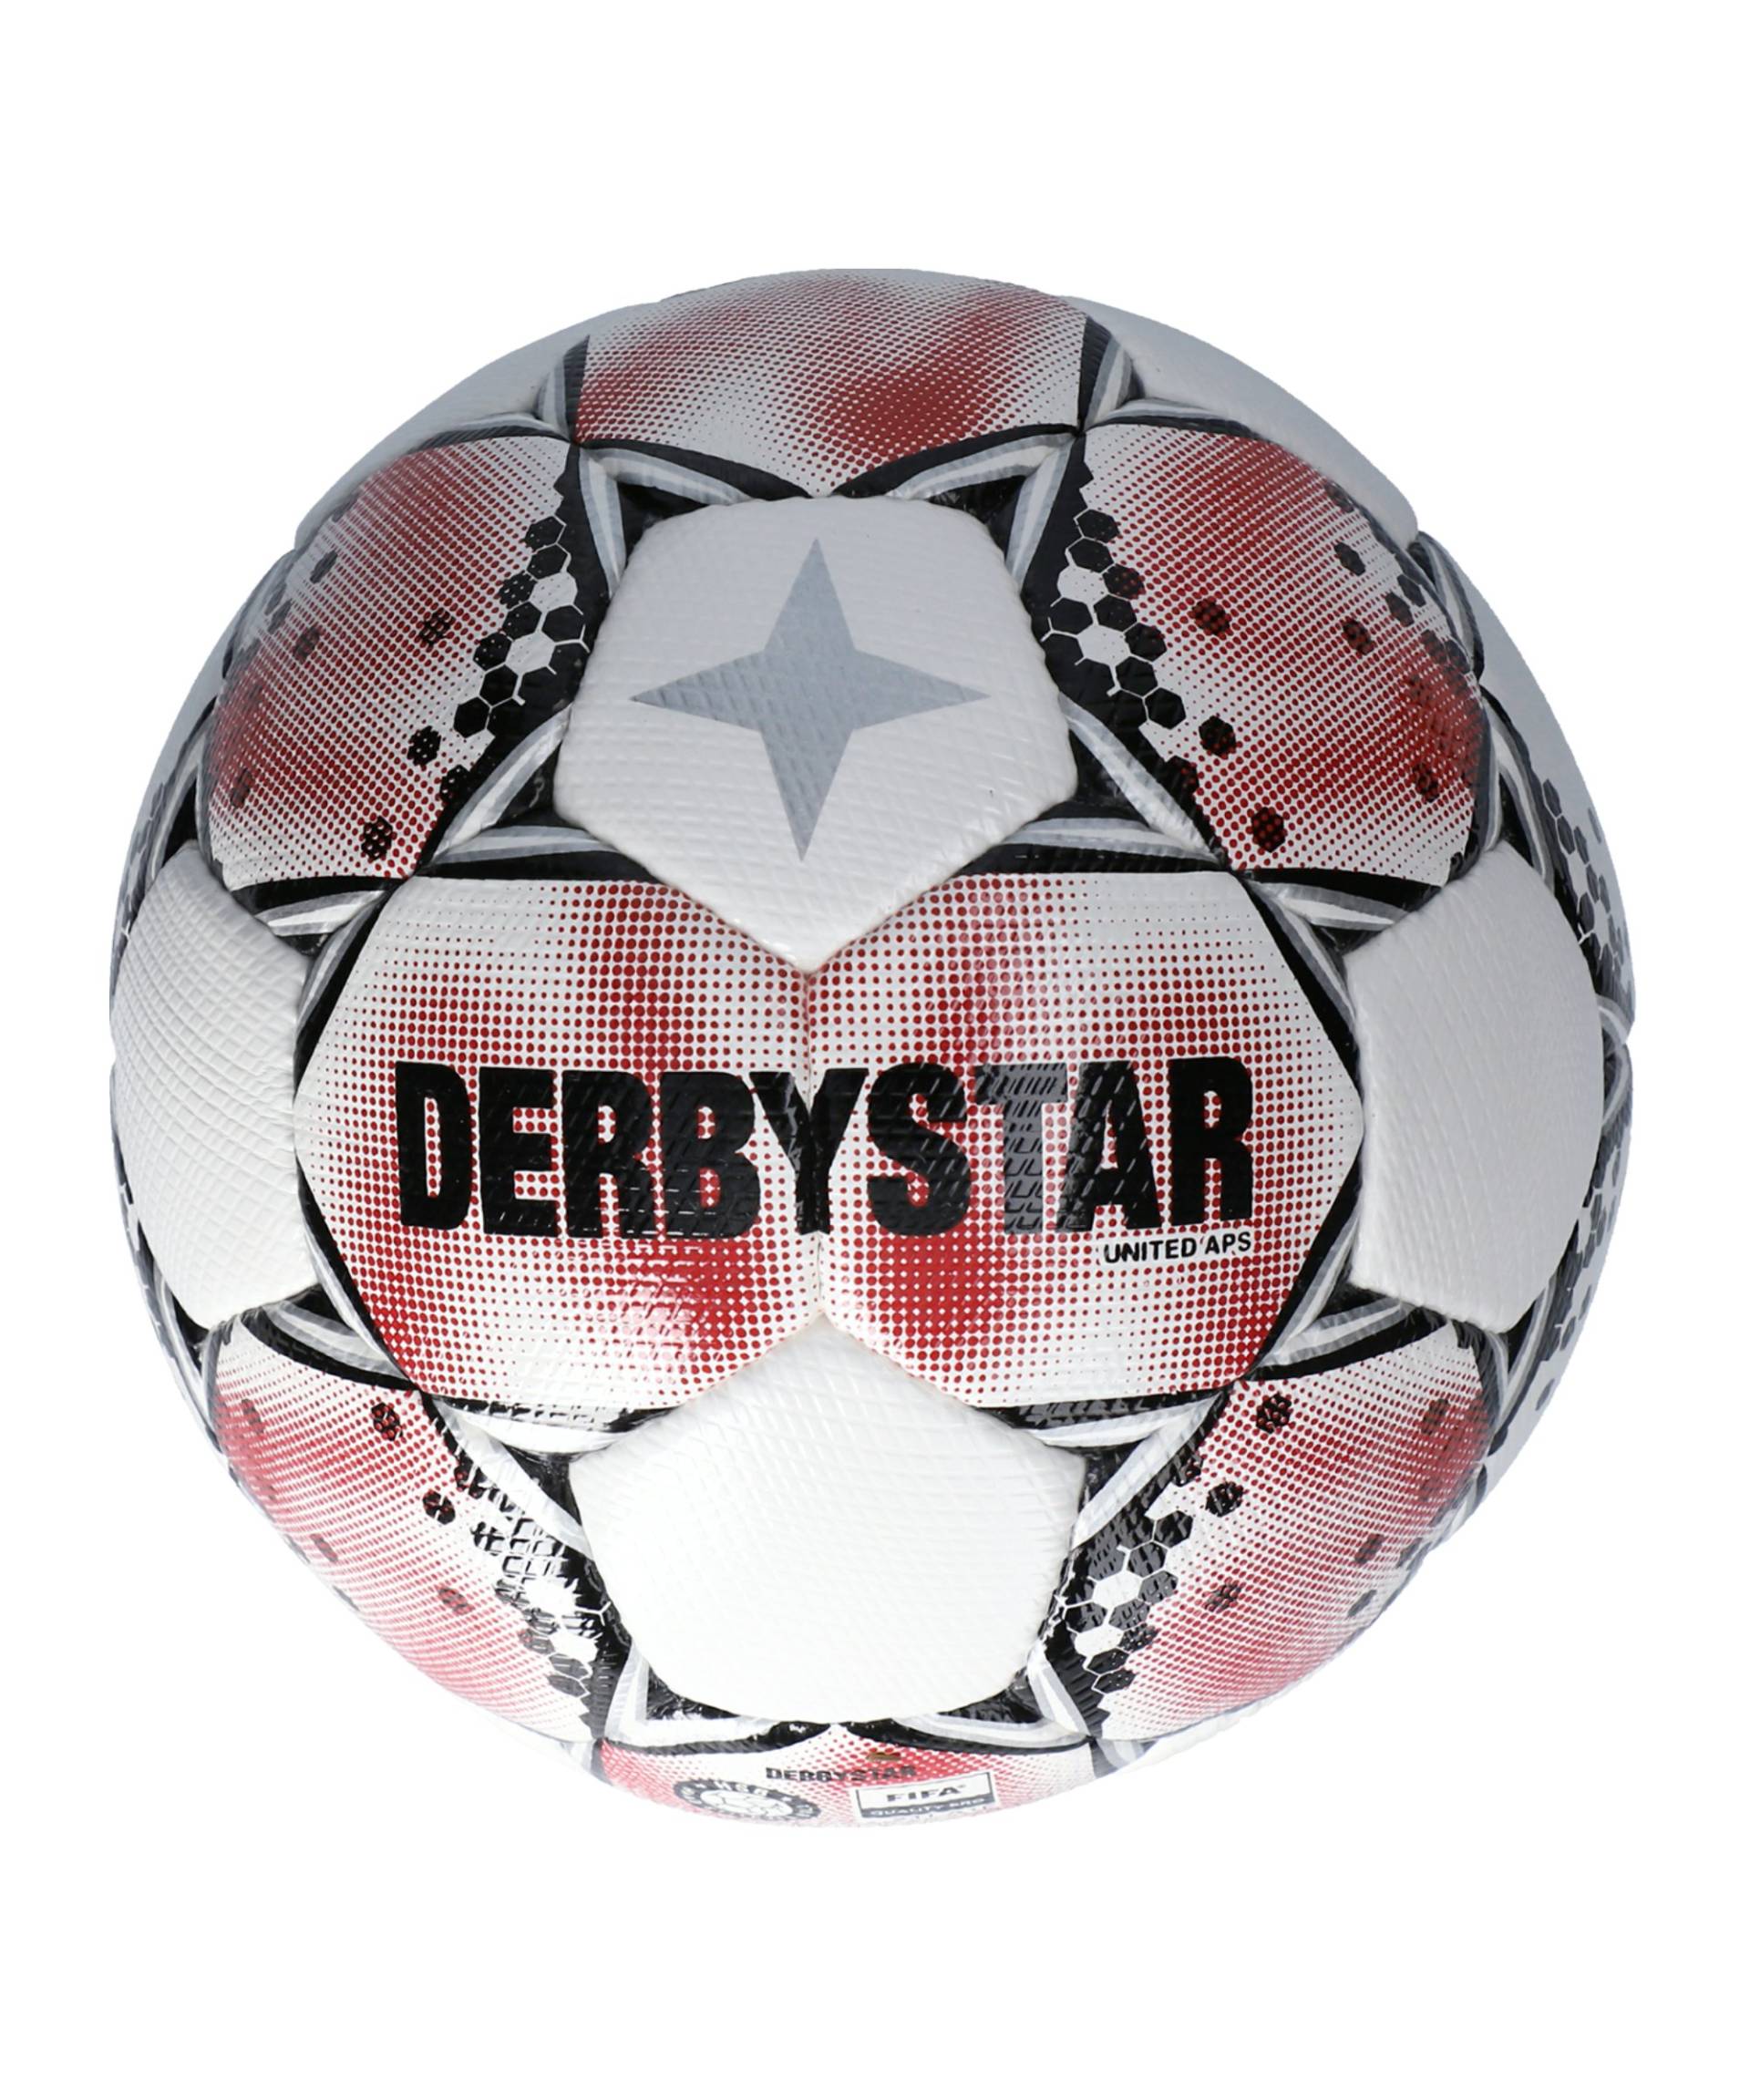 Derbystar UNITED APS v23 Spielball F132 von derbystar